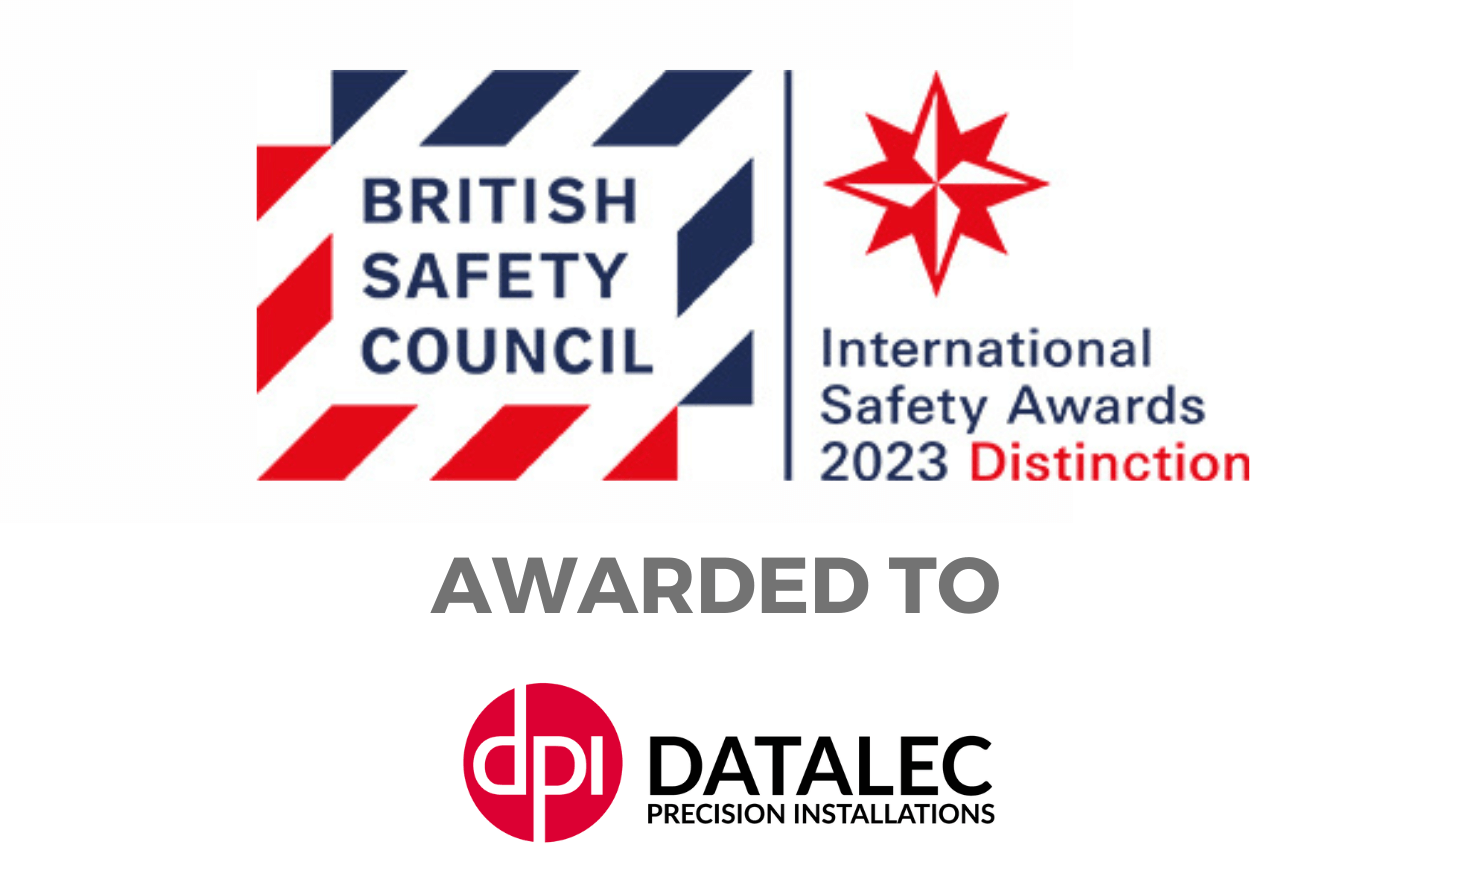 British Safety Council - International Safety Awards 2023 Distinction - Awarded to DPI